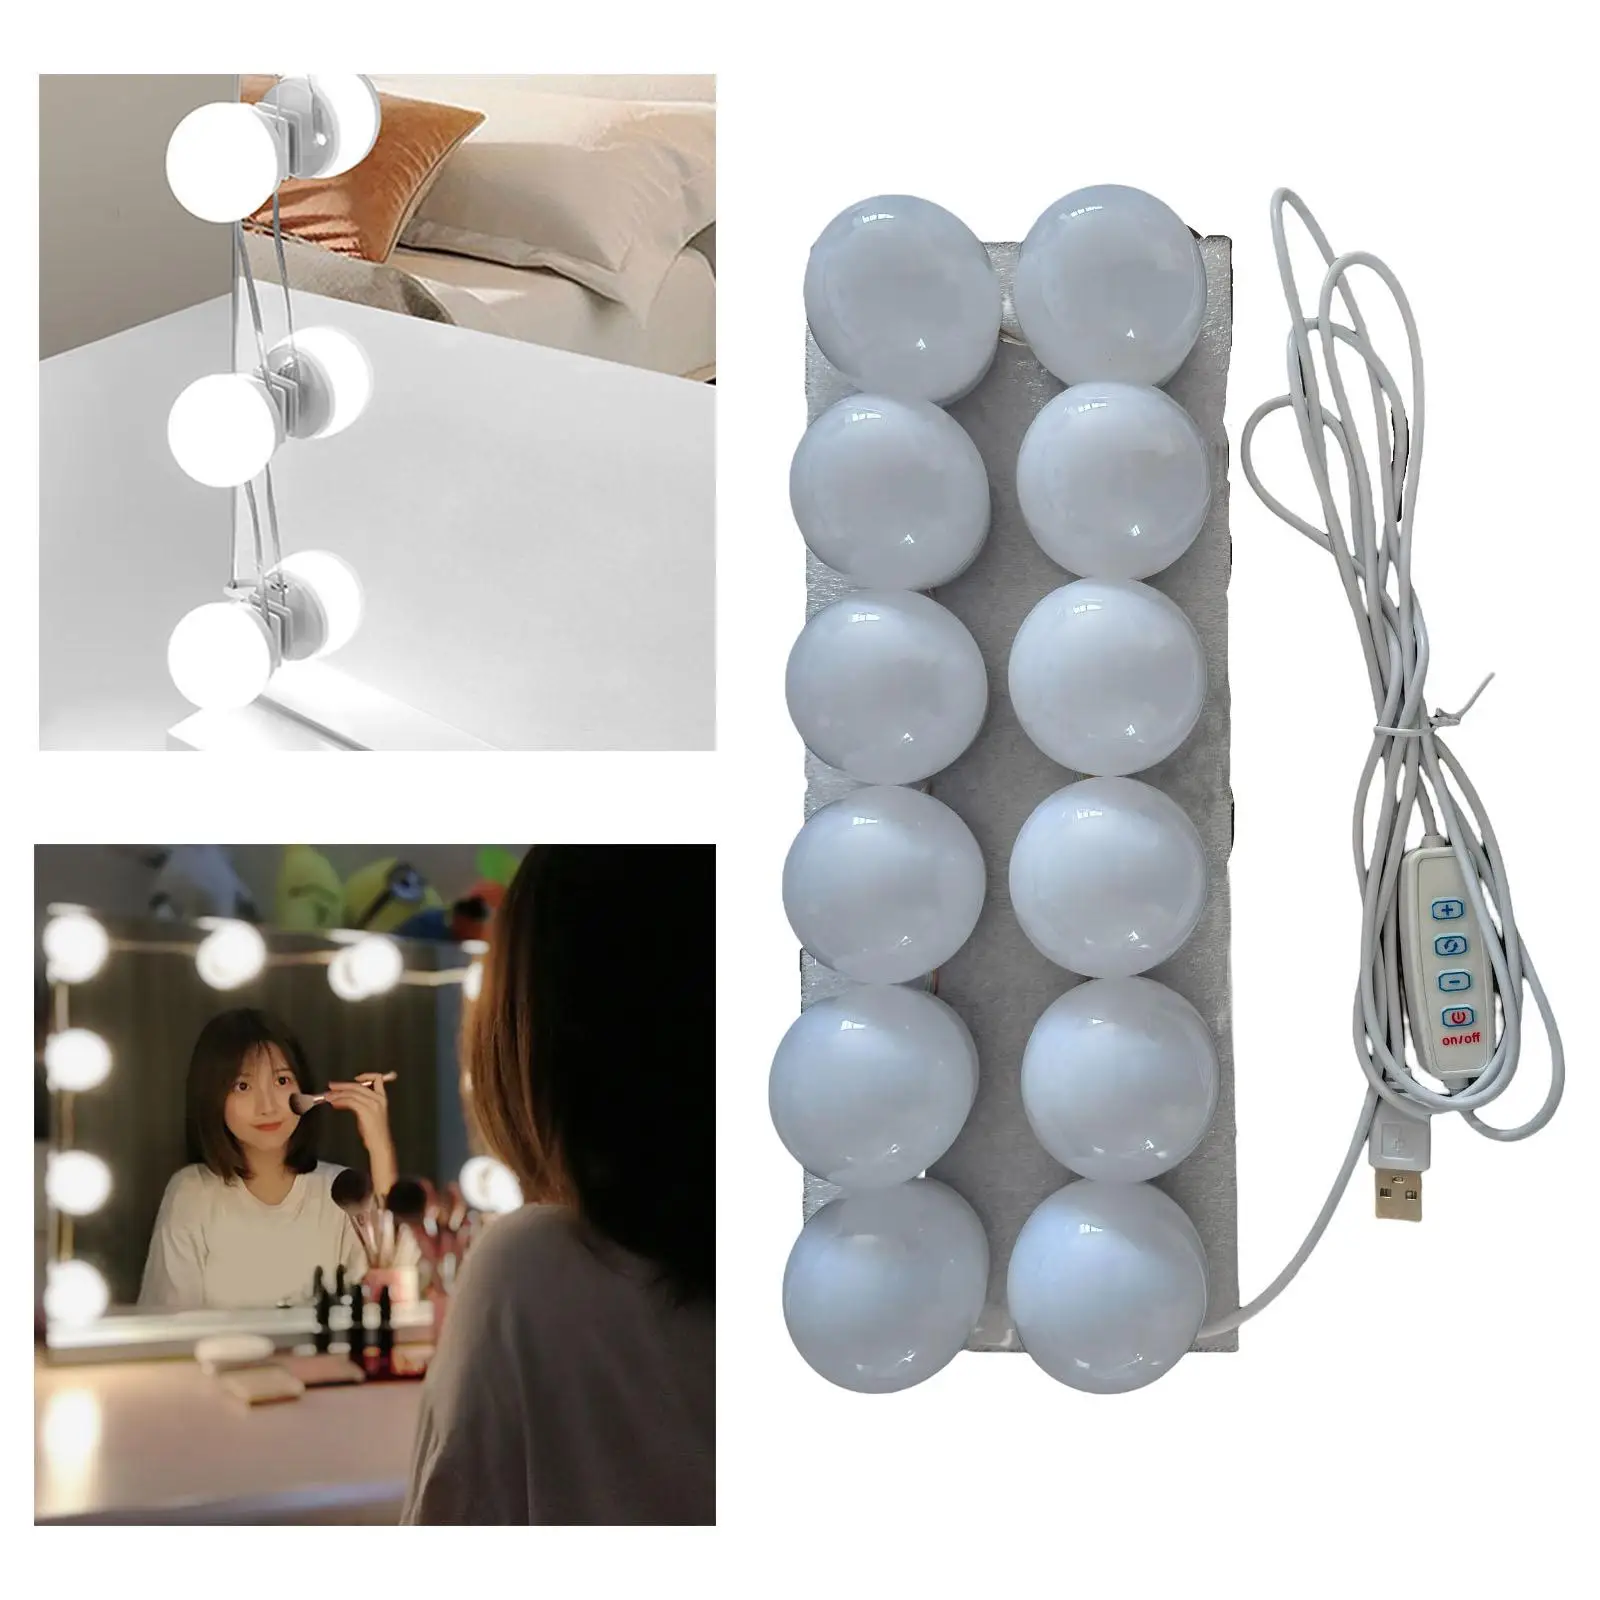 Vanity Bulbs Adjustable Simple Cosmetic Mirror for Vanity Stick Restroom Decor Bedroom Tabletop Bathroom mirror Improvement